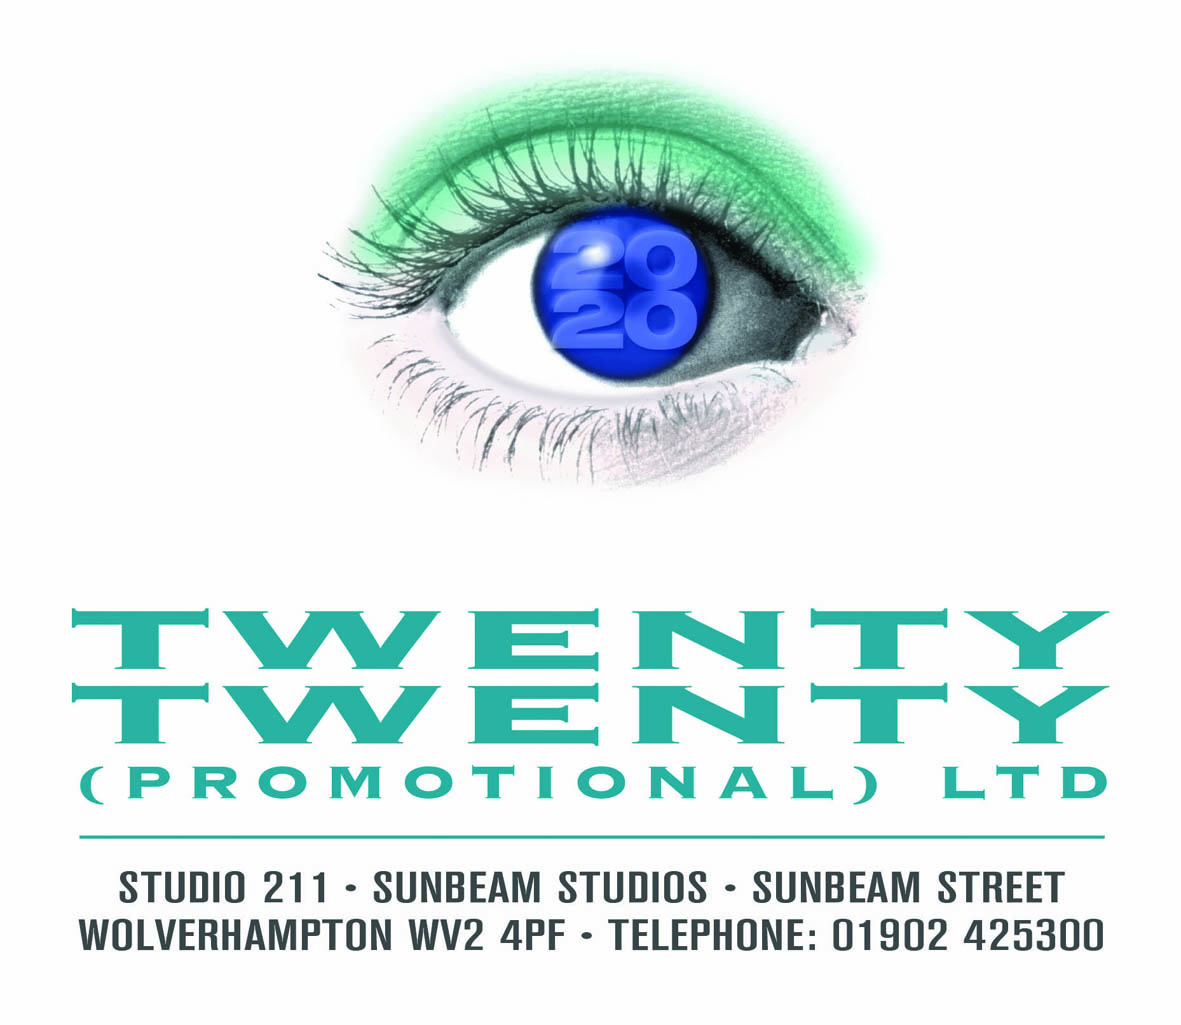 Twenty Twenty (Promotional) Ltd